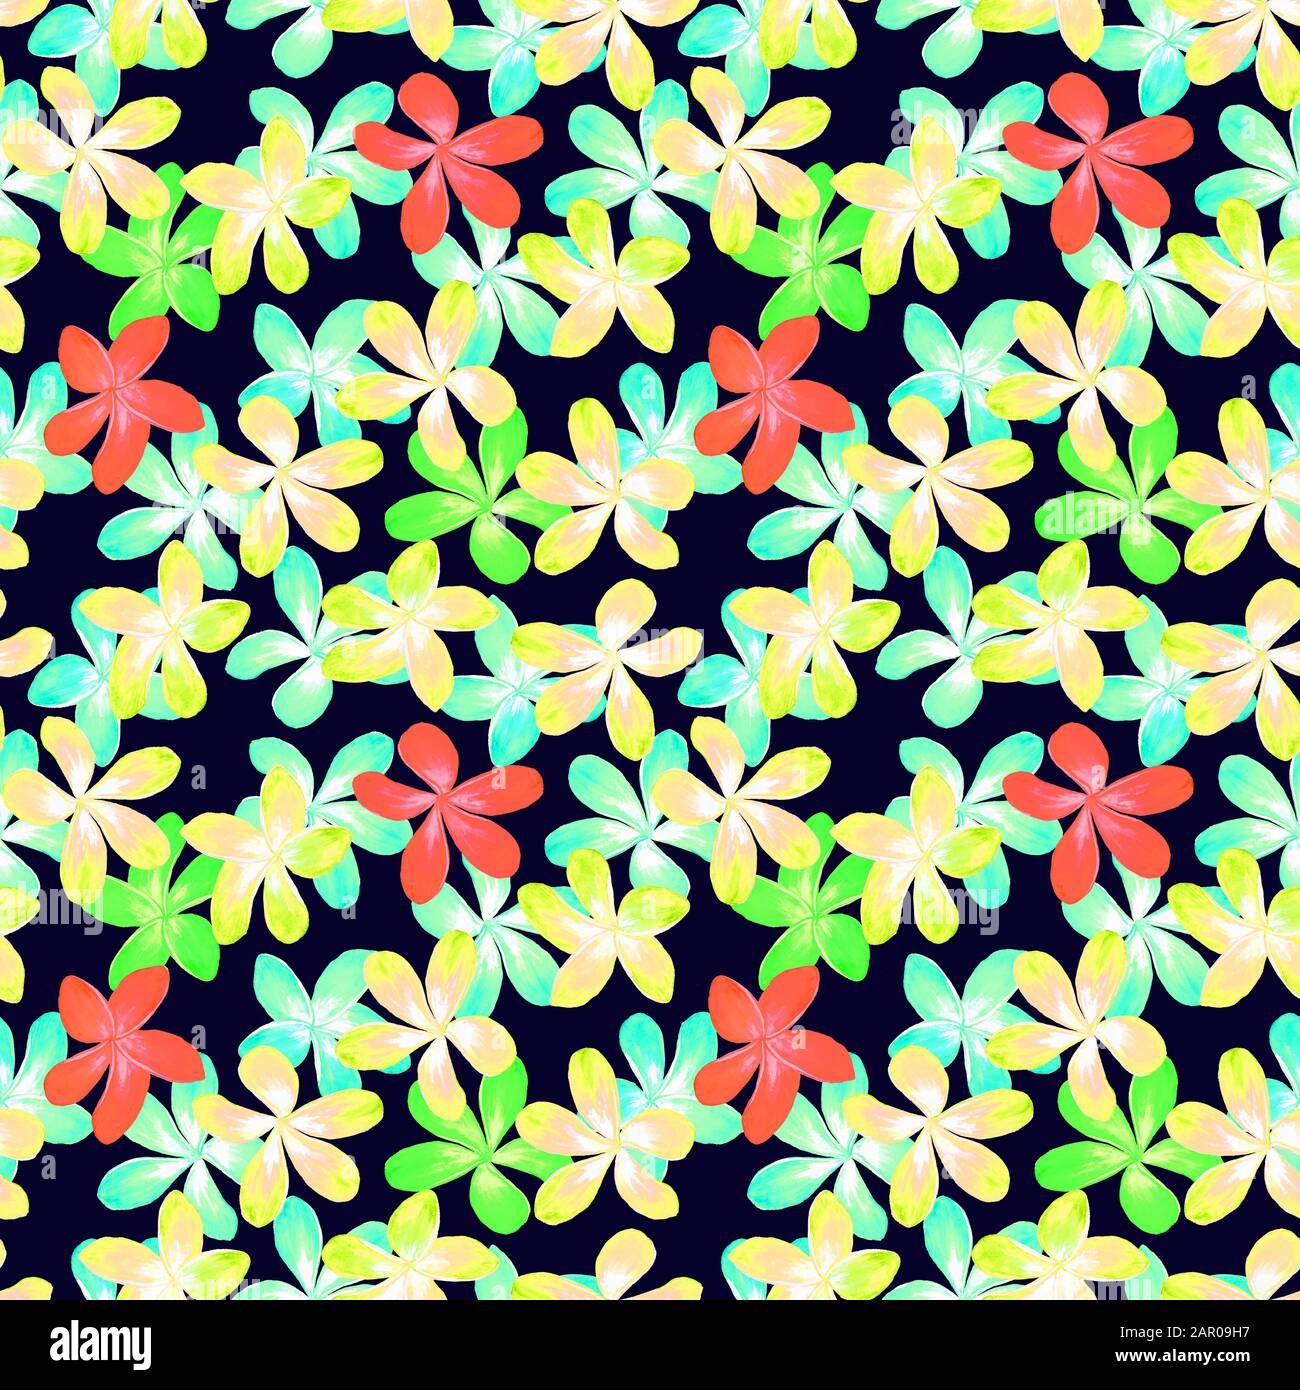 Plumeria colorful flowers, watercolor illustration, seamless pattern design on dark background Stock Photo